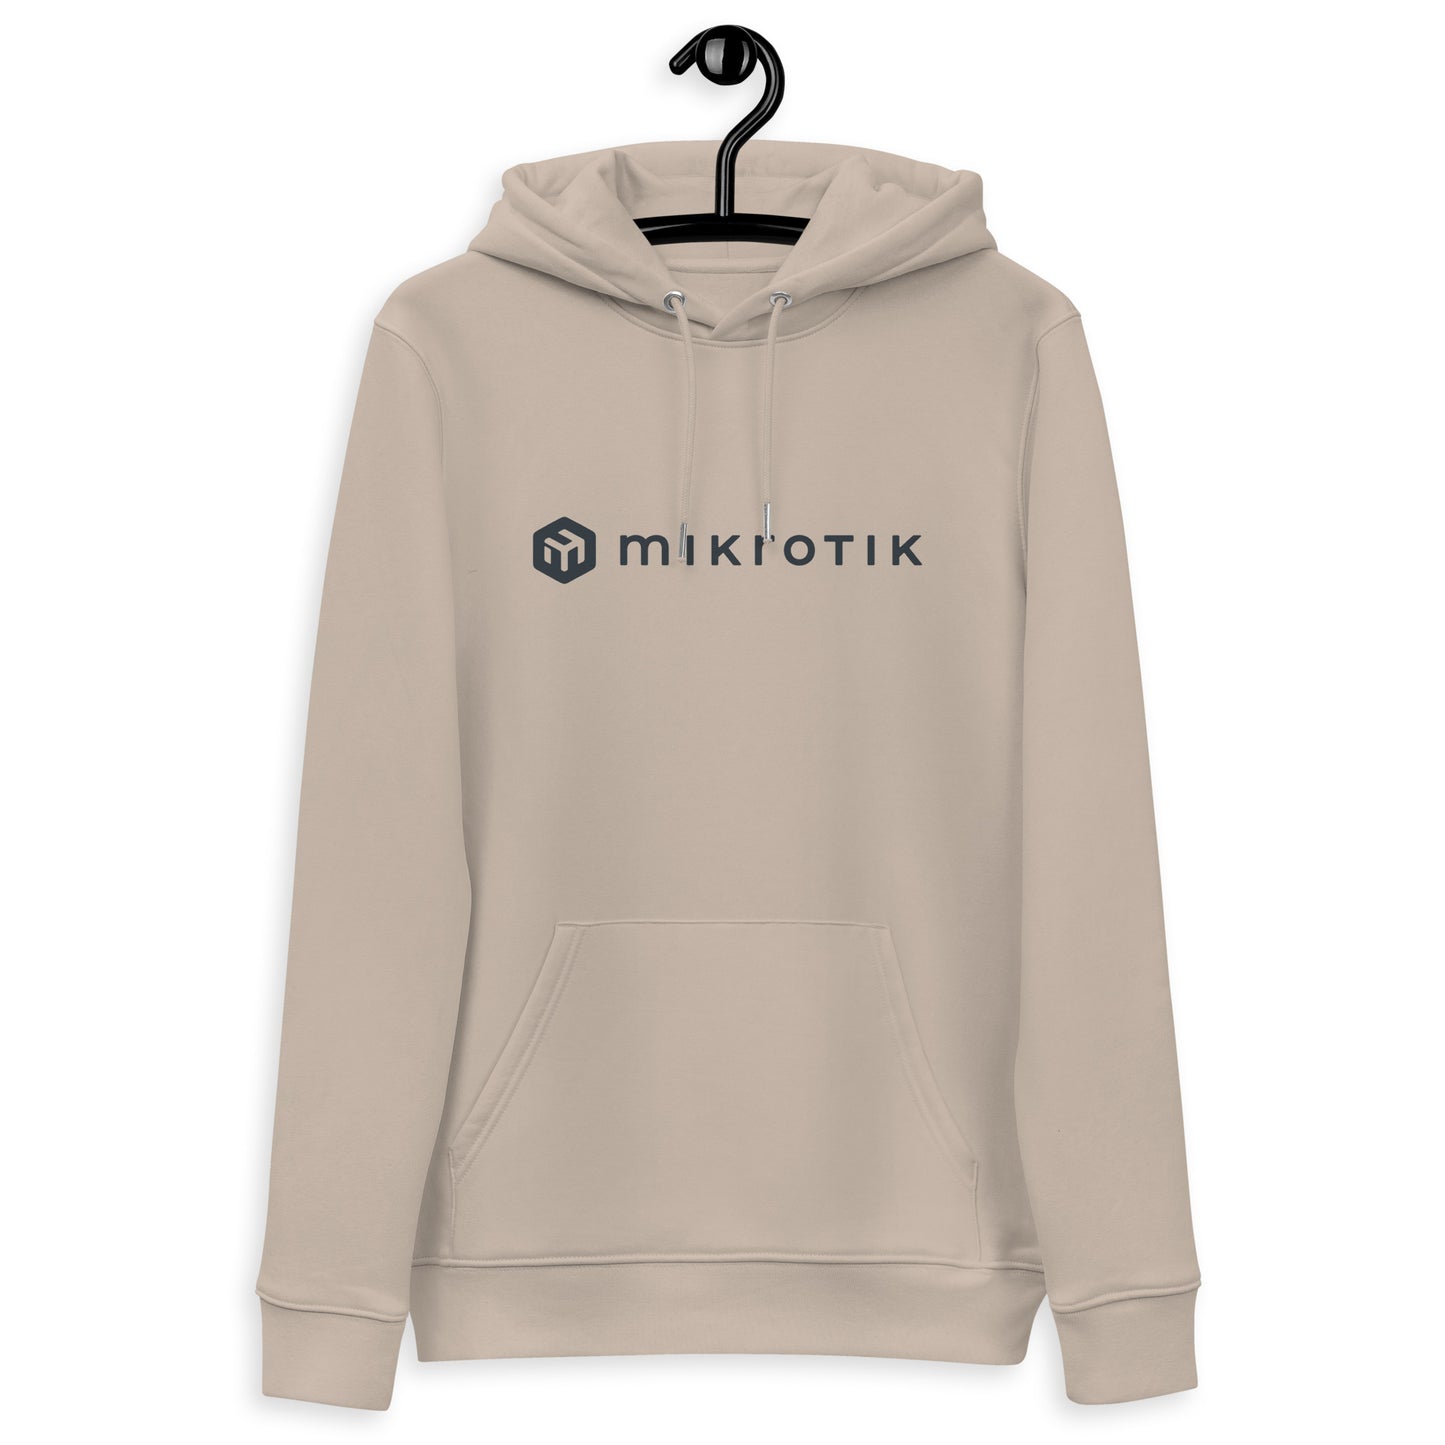 Unisex essential eco hoodie